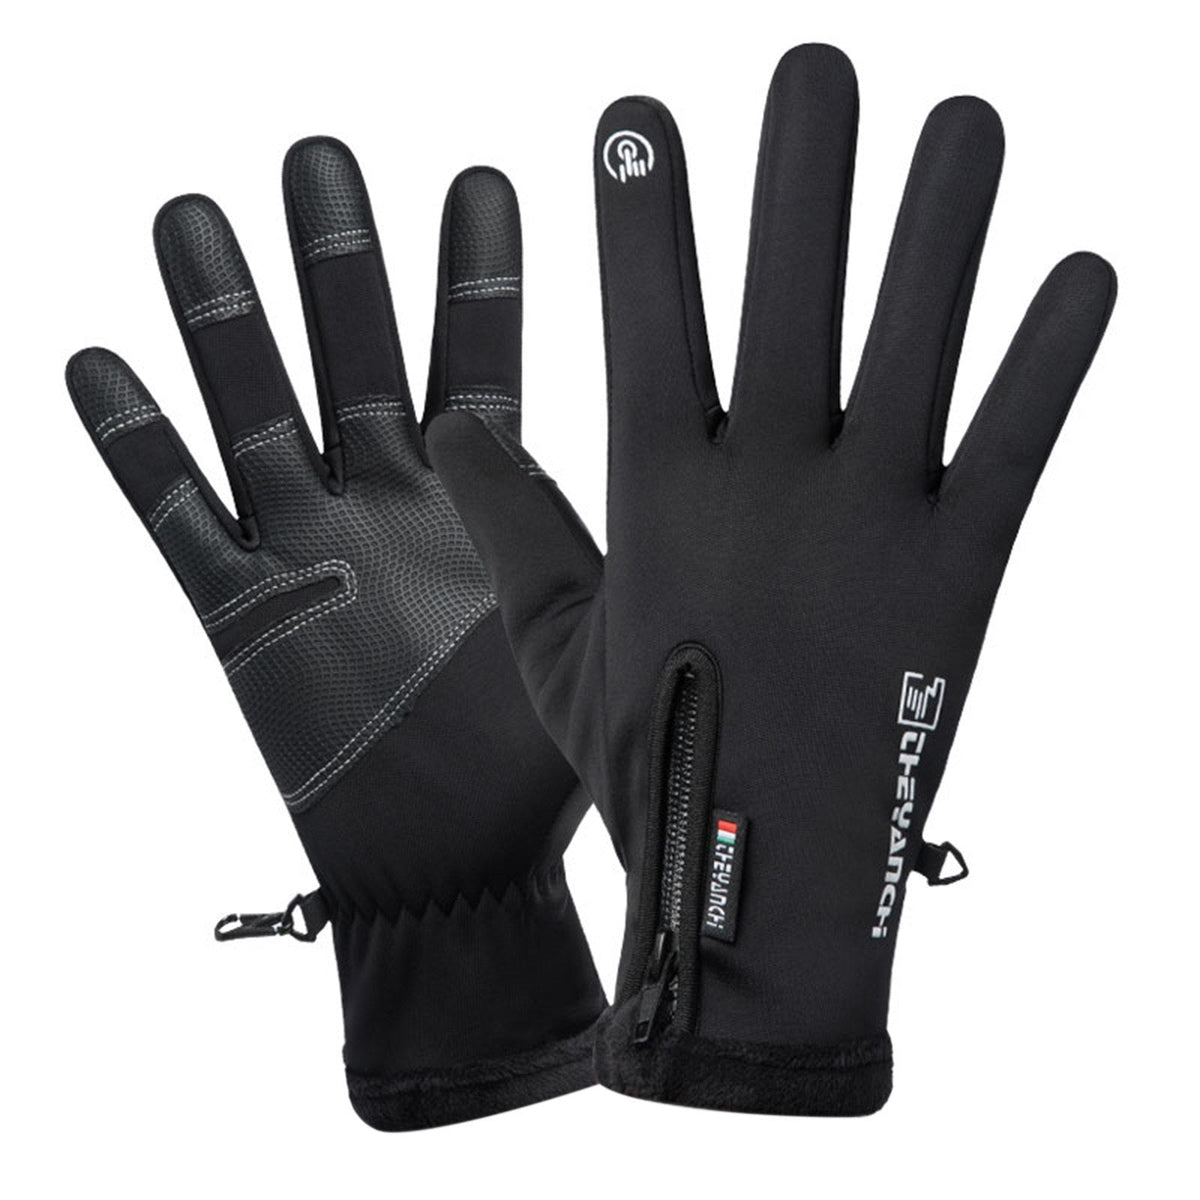 Winter Glove Warm Plush Lining N-on-slip Touching Screen with Zipper For Sport Bike Riding